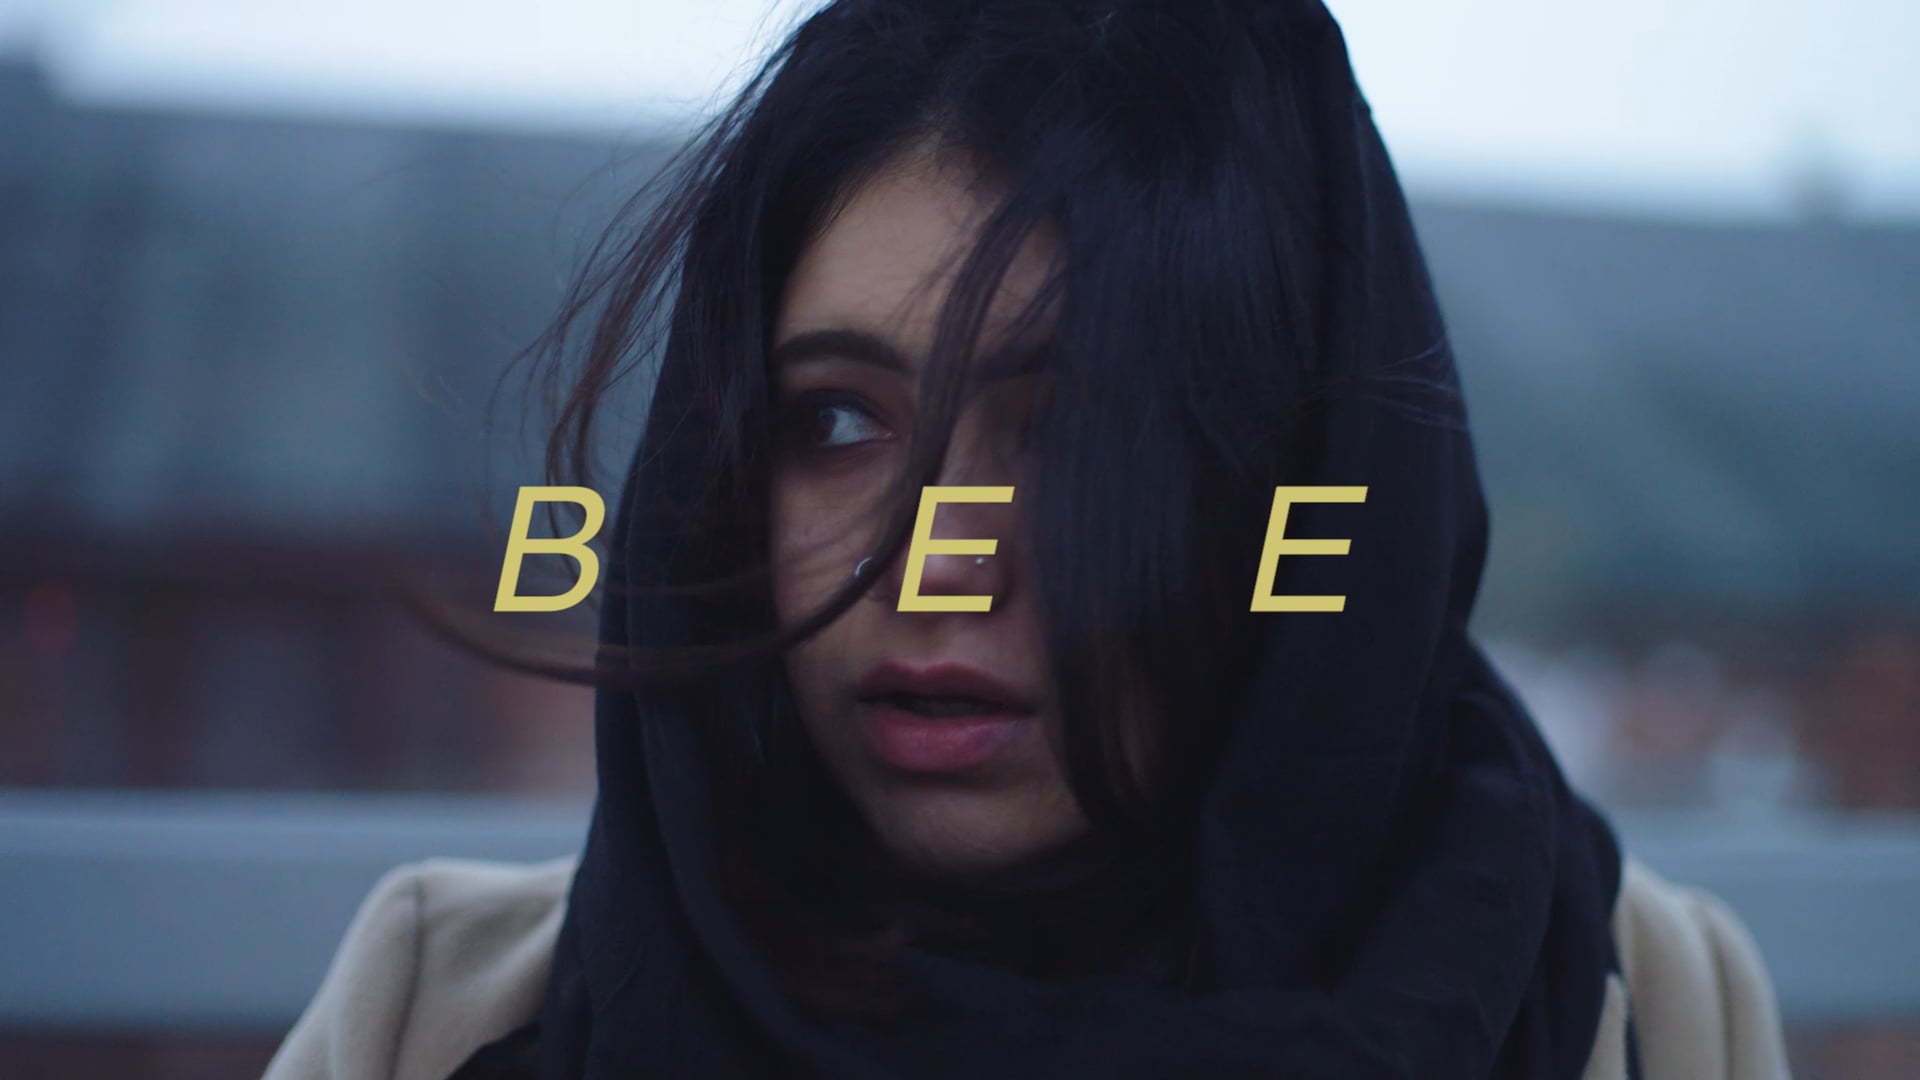 BEE short film trailer